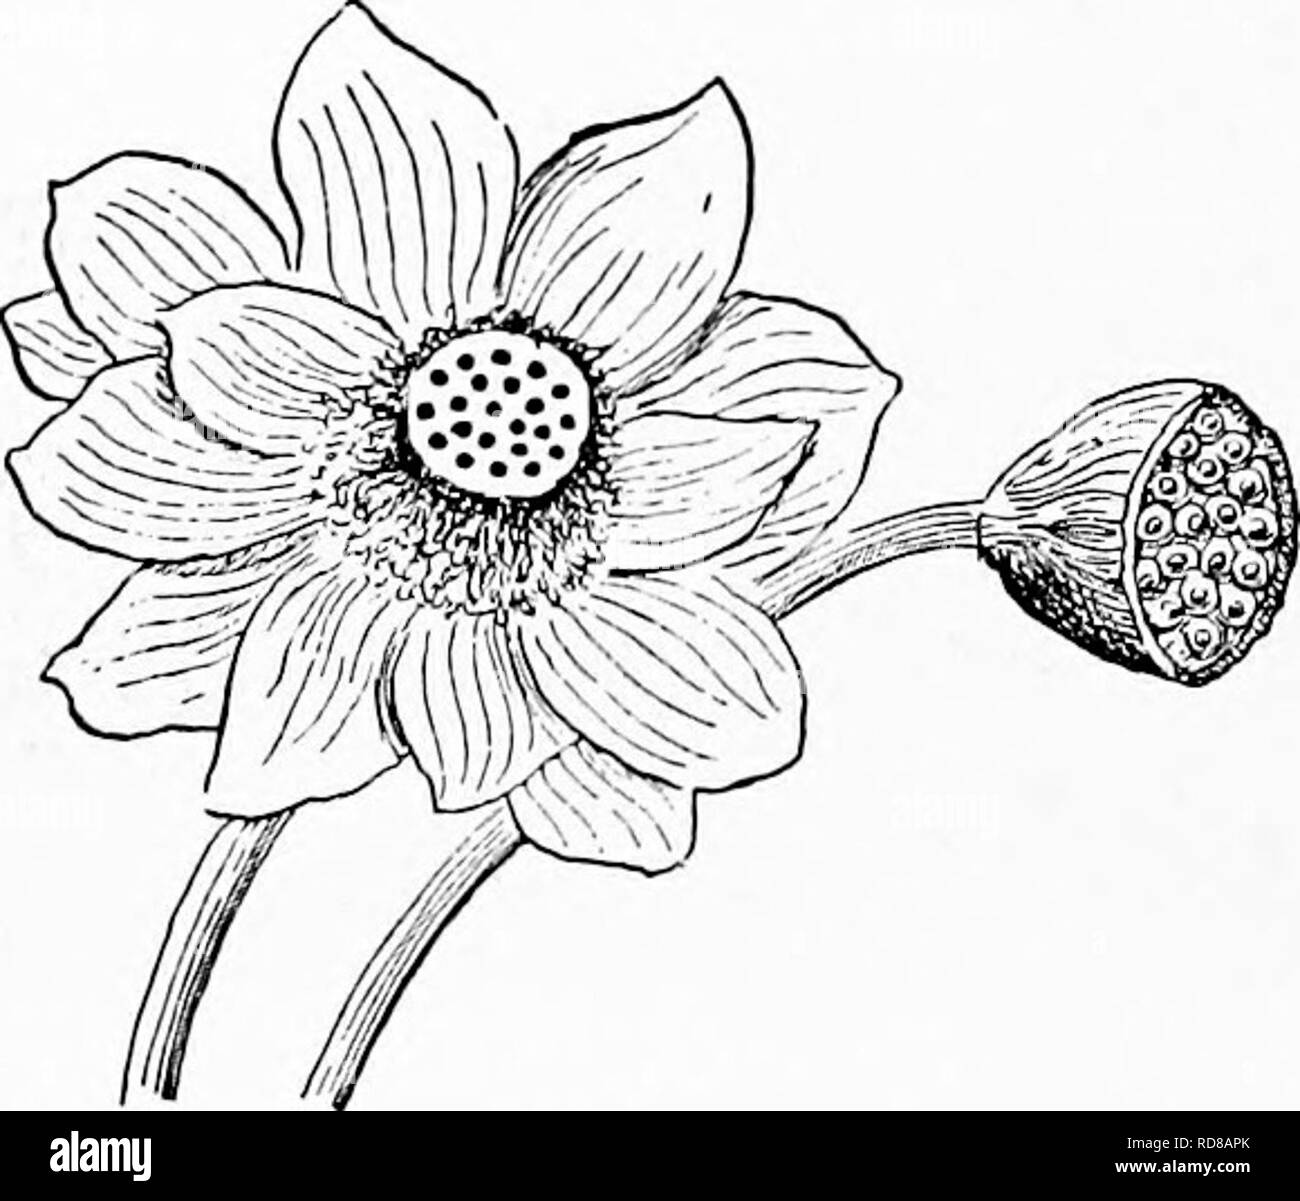 Jasmine flowers. Hand drawn realistic sketch. Nature study. Graphite pencil  on paper Stock Illustration | Adobe Stock